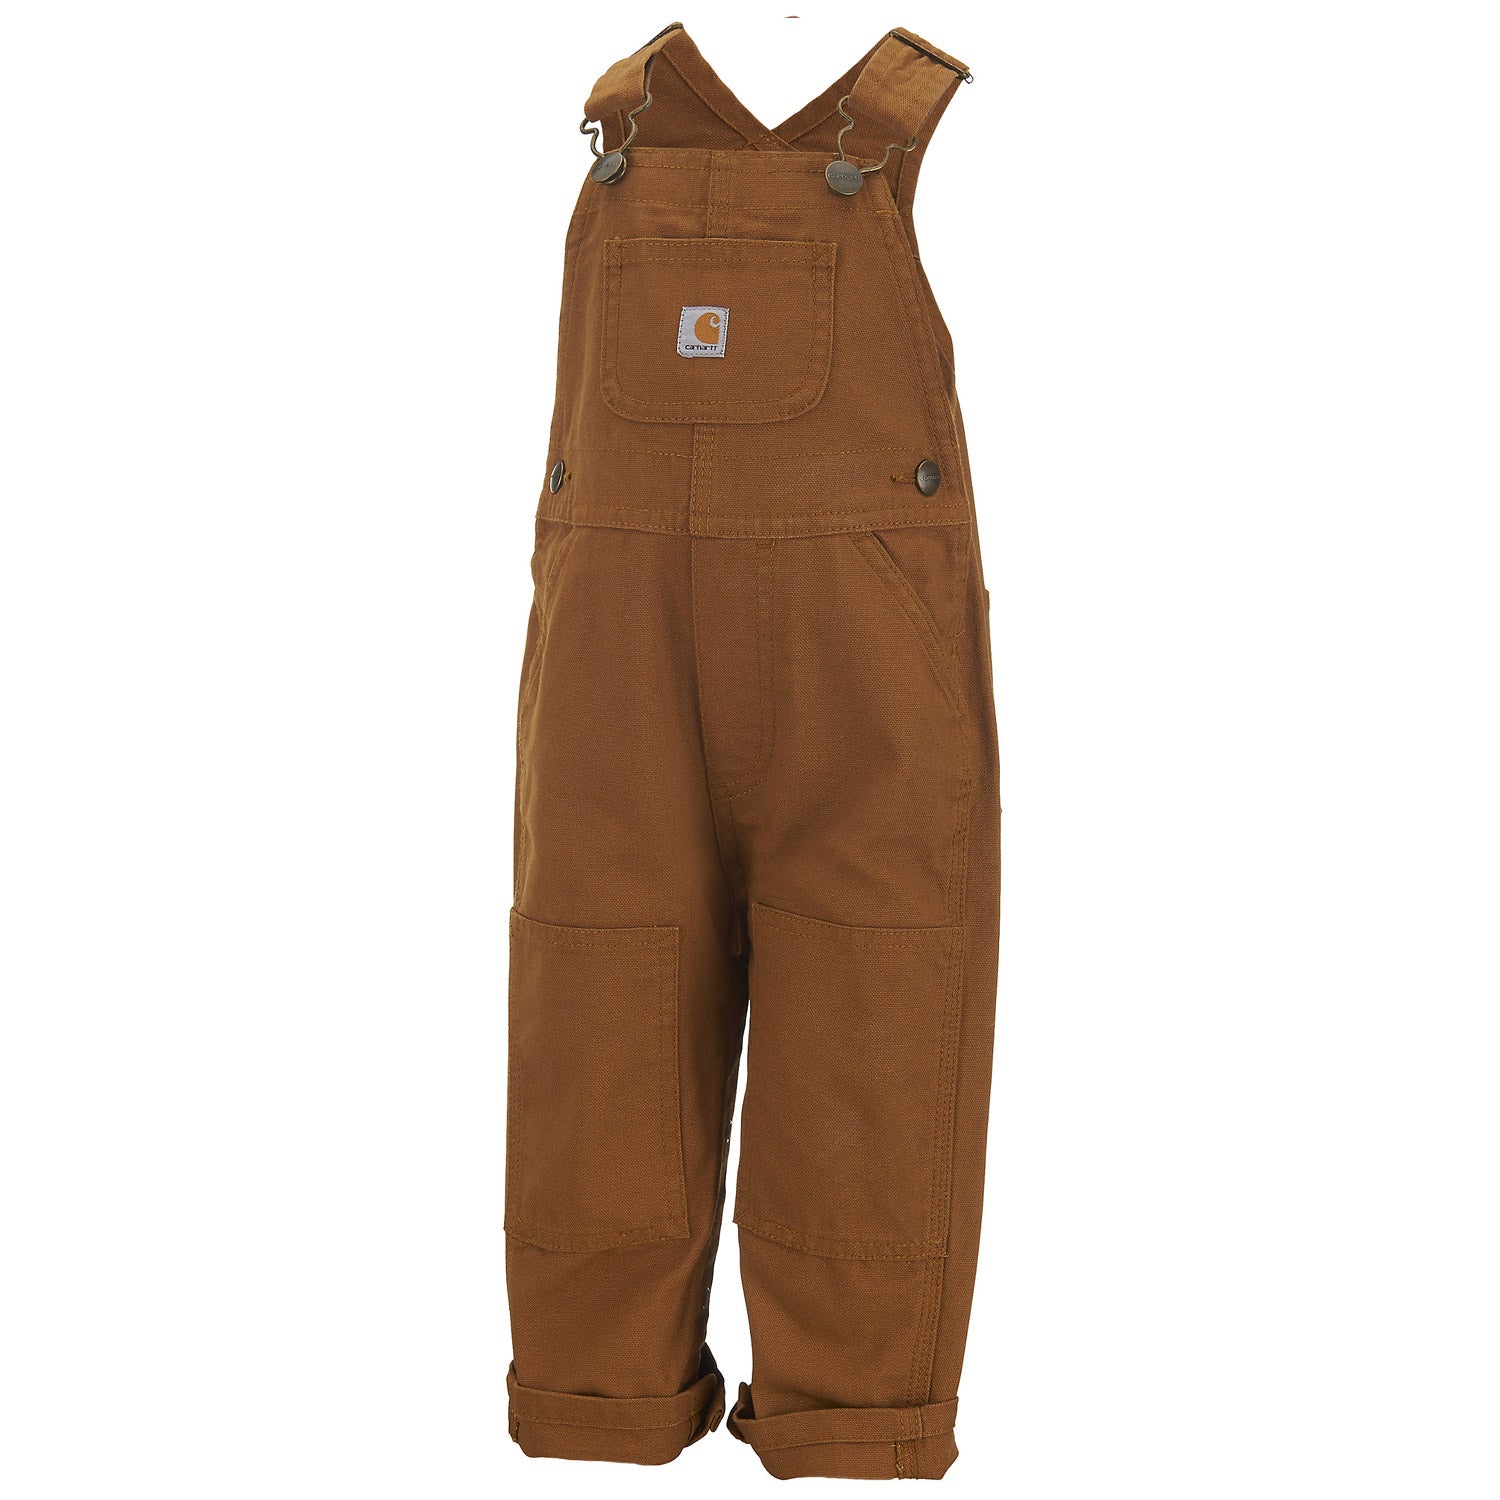 Carhartt Kids' Duck Canvas Bib Overall - Work World - Workwear, Work Boots, Safety Gear